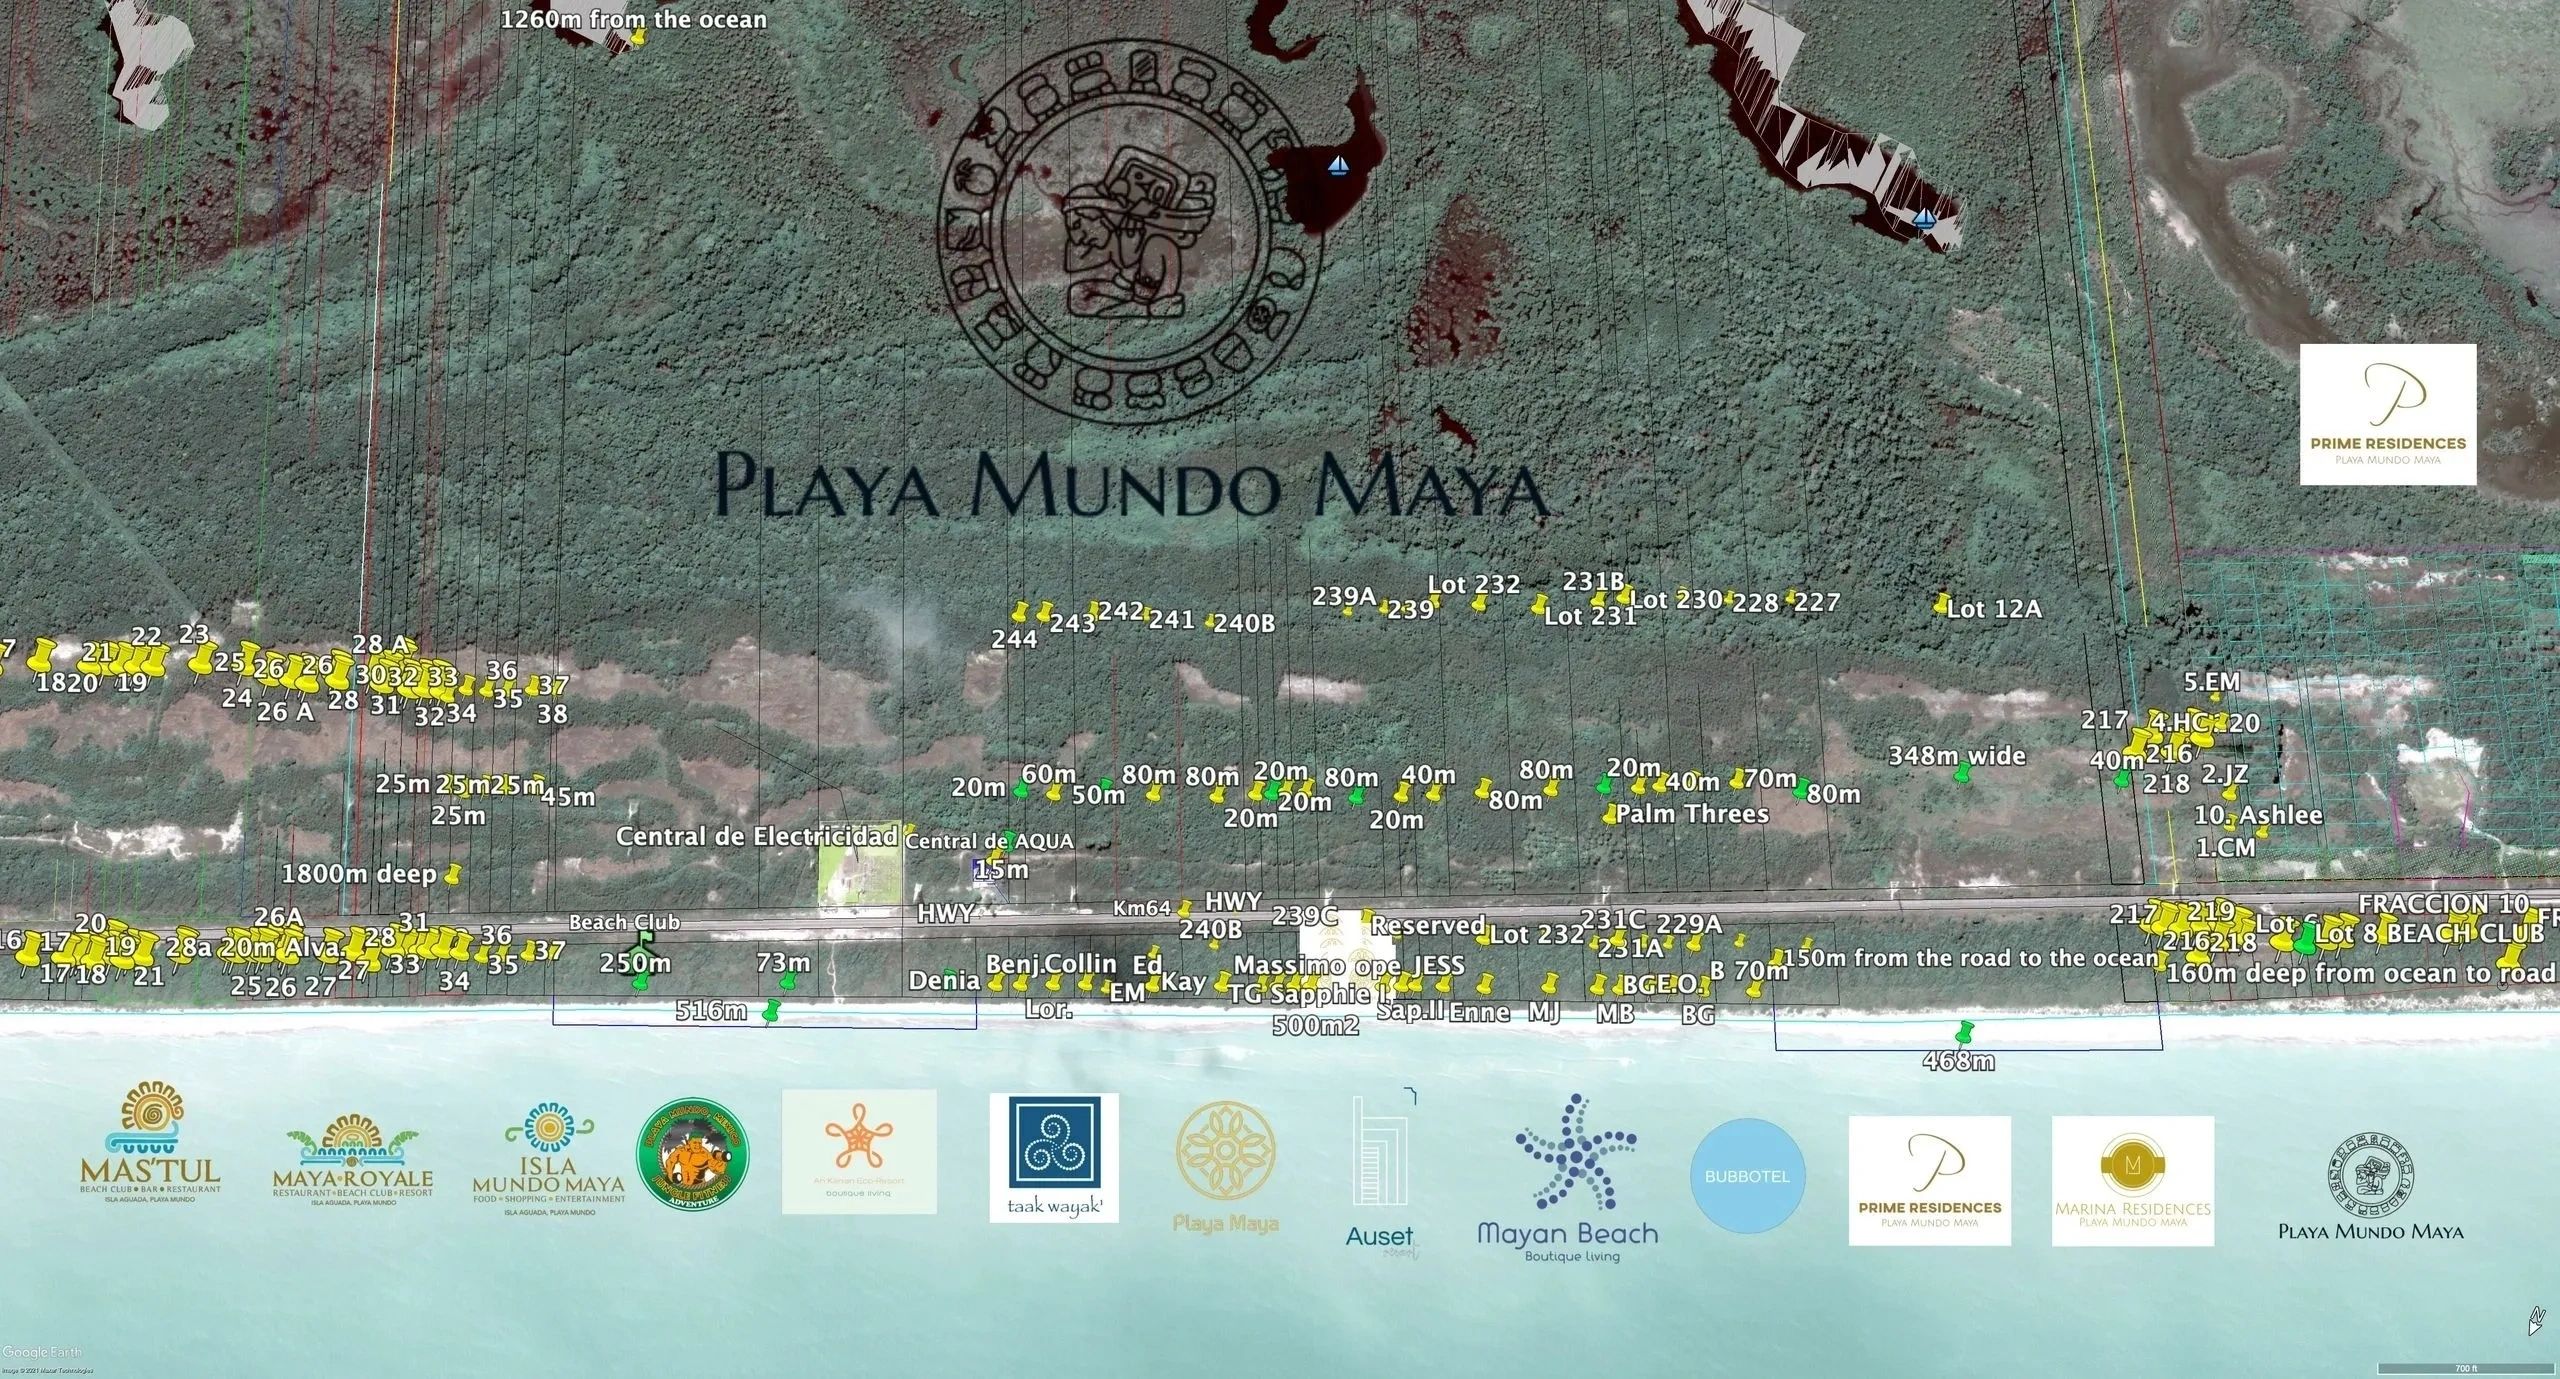 Playa Mundo Maya Beachfront development plan